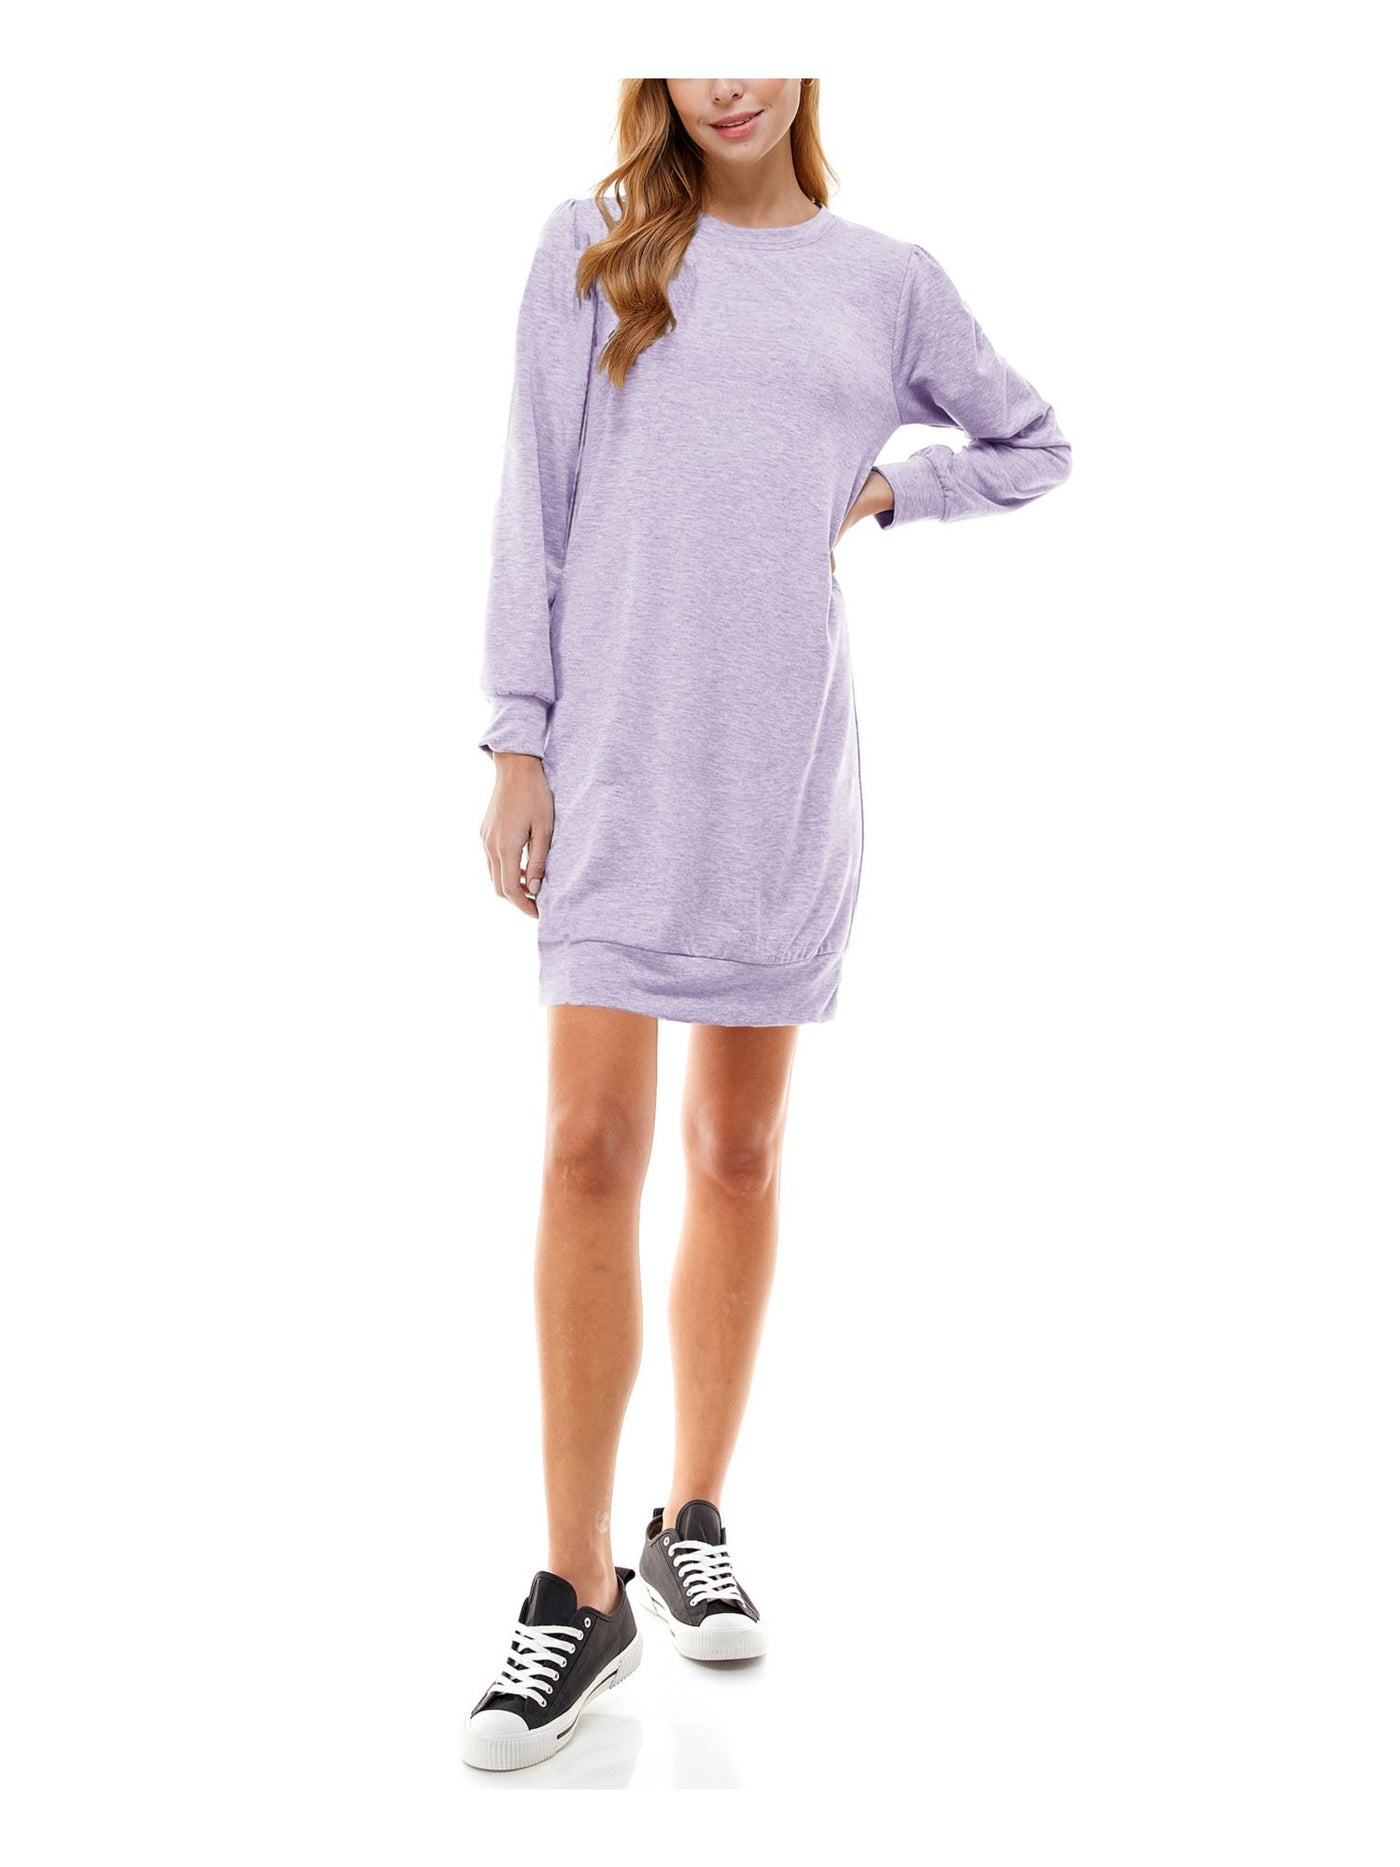 KINGSTON GREY Womens Light Purple Long Sleeve Crew Neck Mini Shirt Dress Juniors S